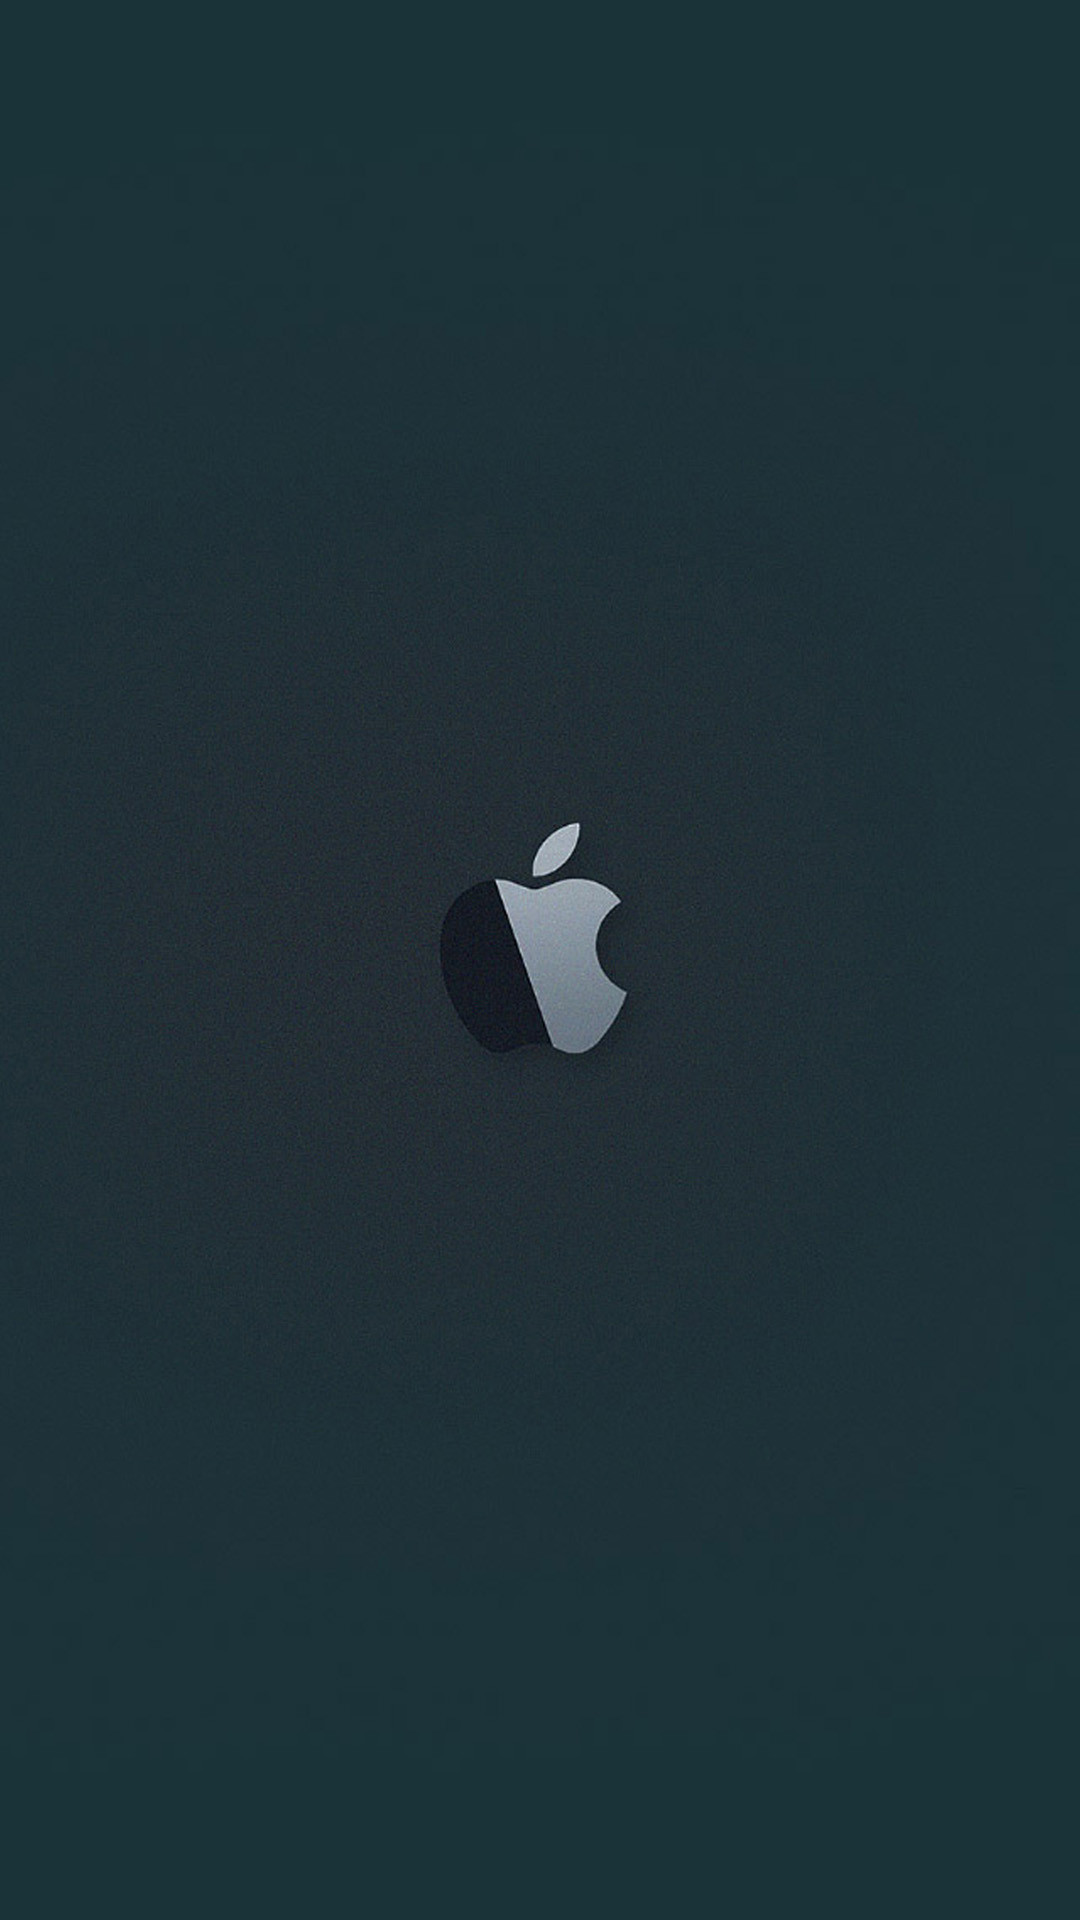 Apple Shiny Black Rear HD Wallpaper iPhone 6 plus – wallpapersmobile .